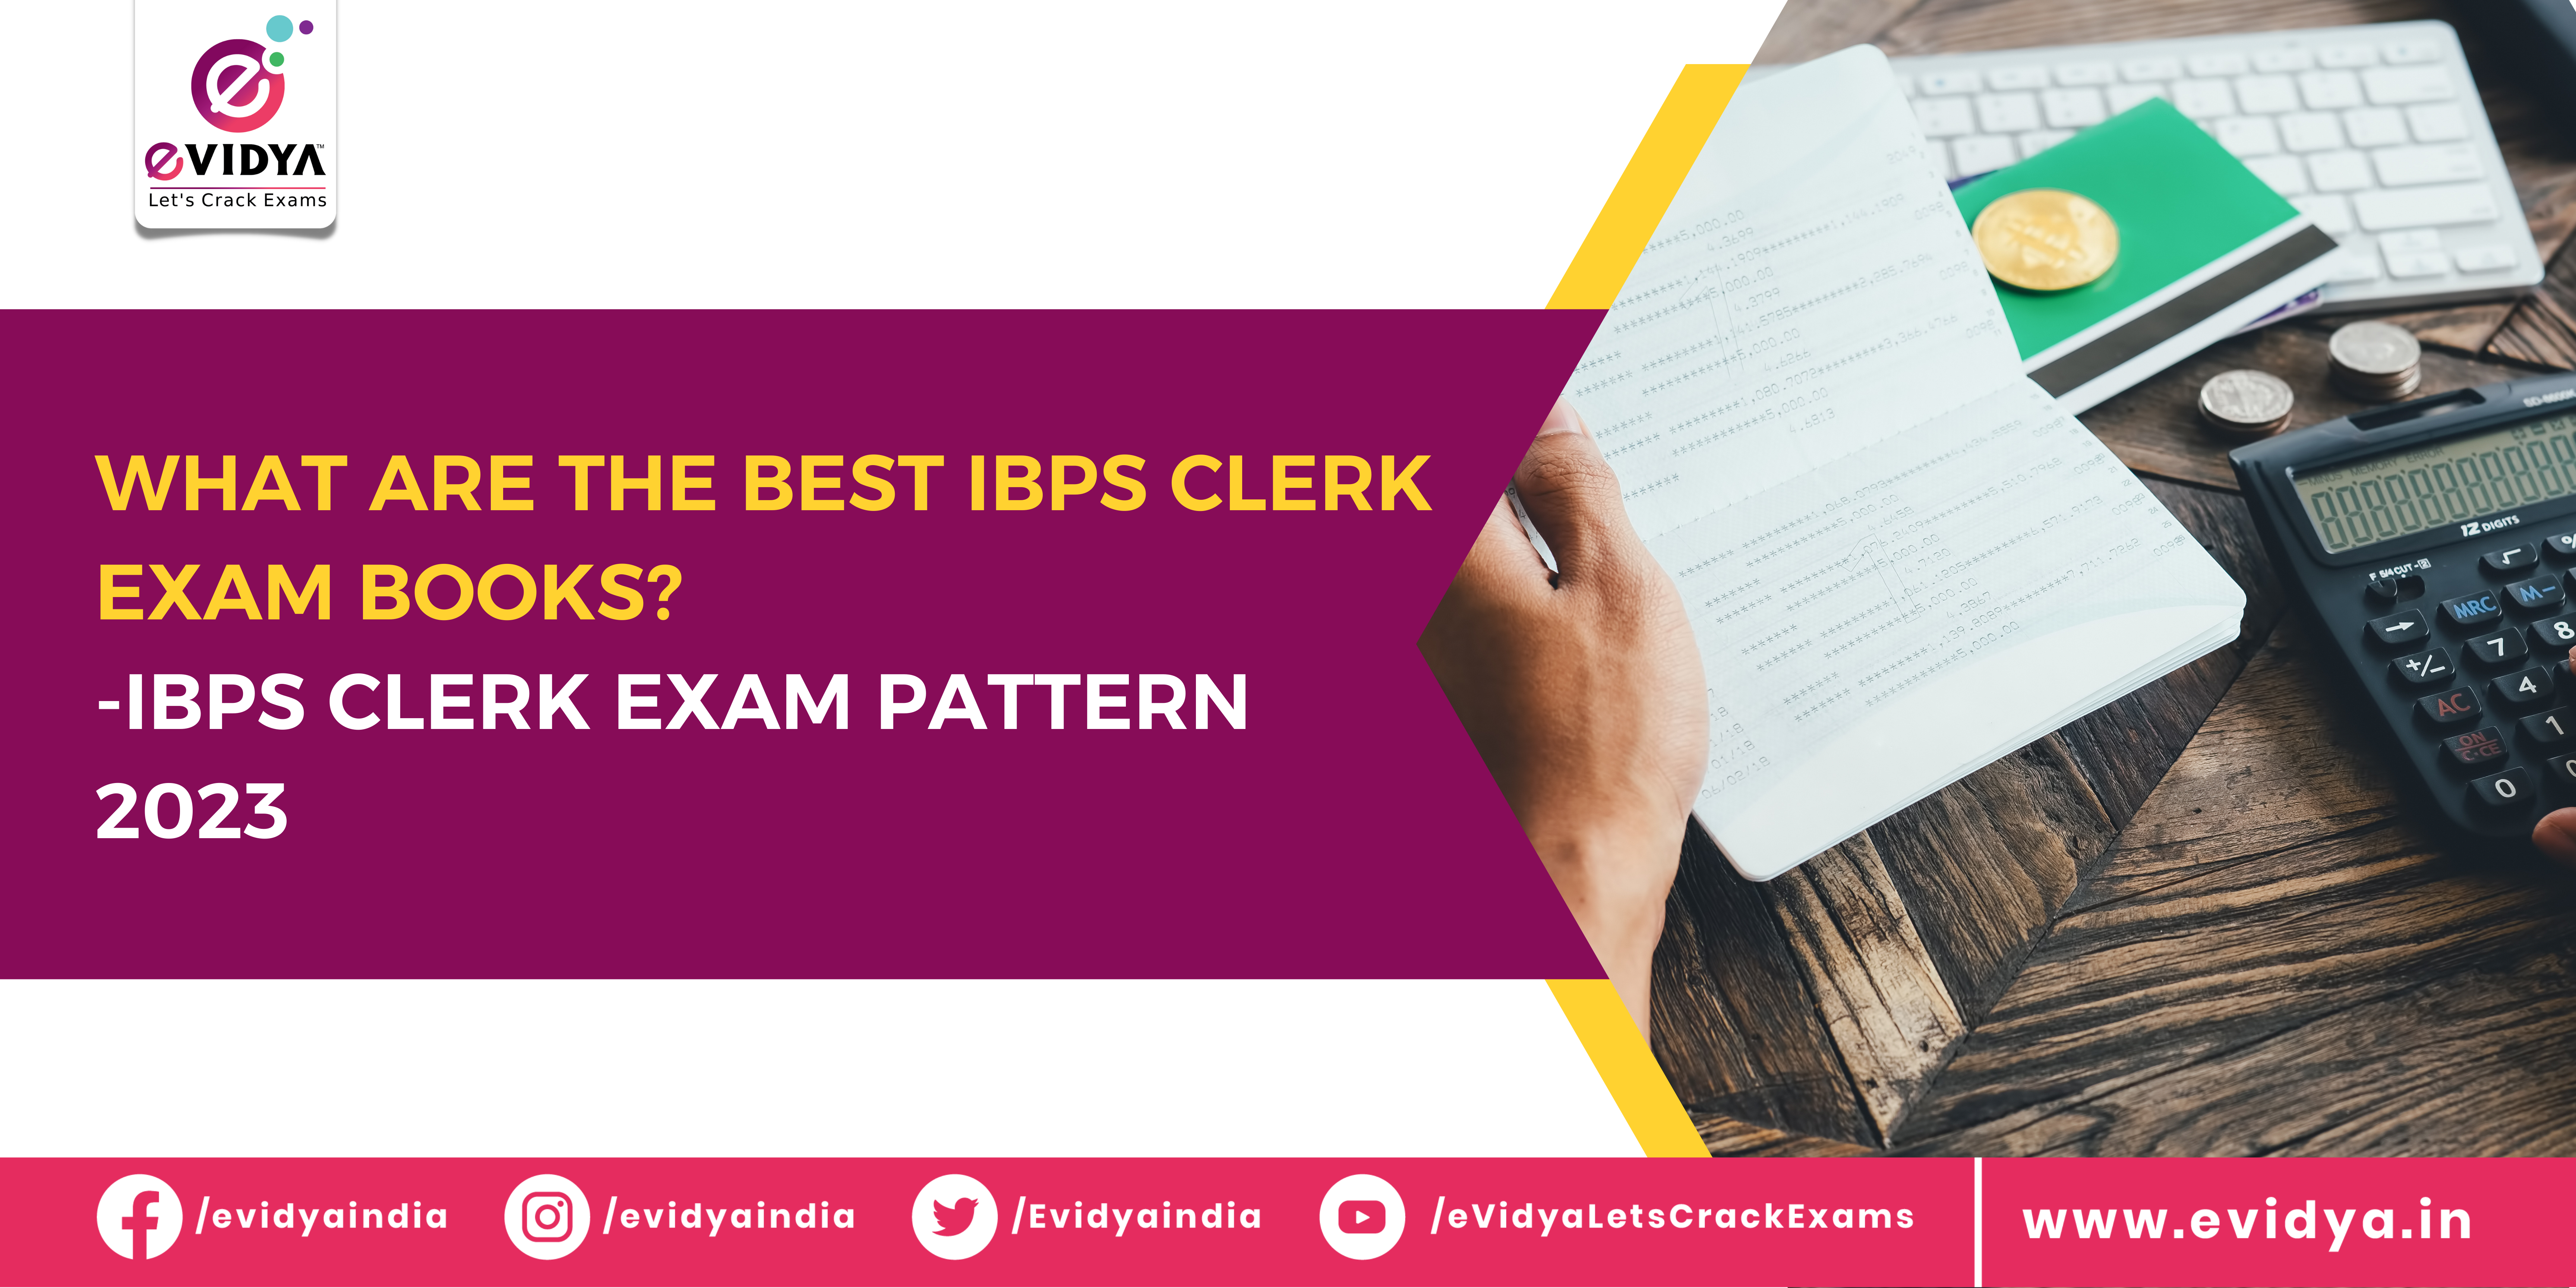 IBPS Clerk exam books